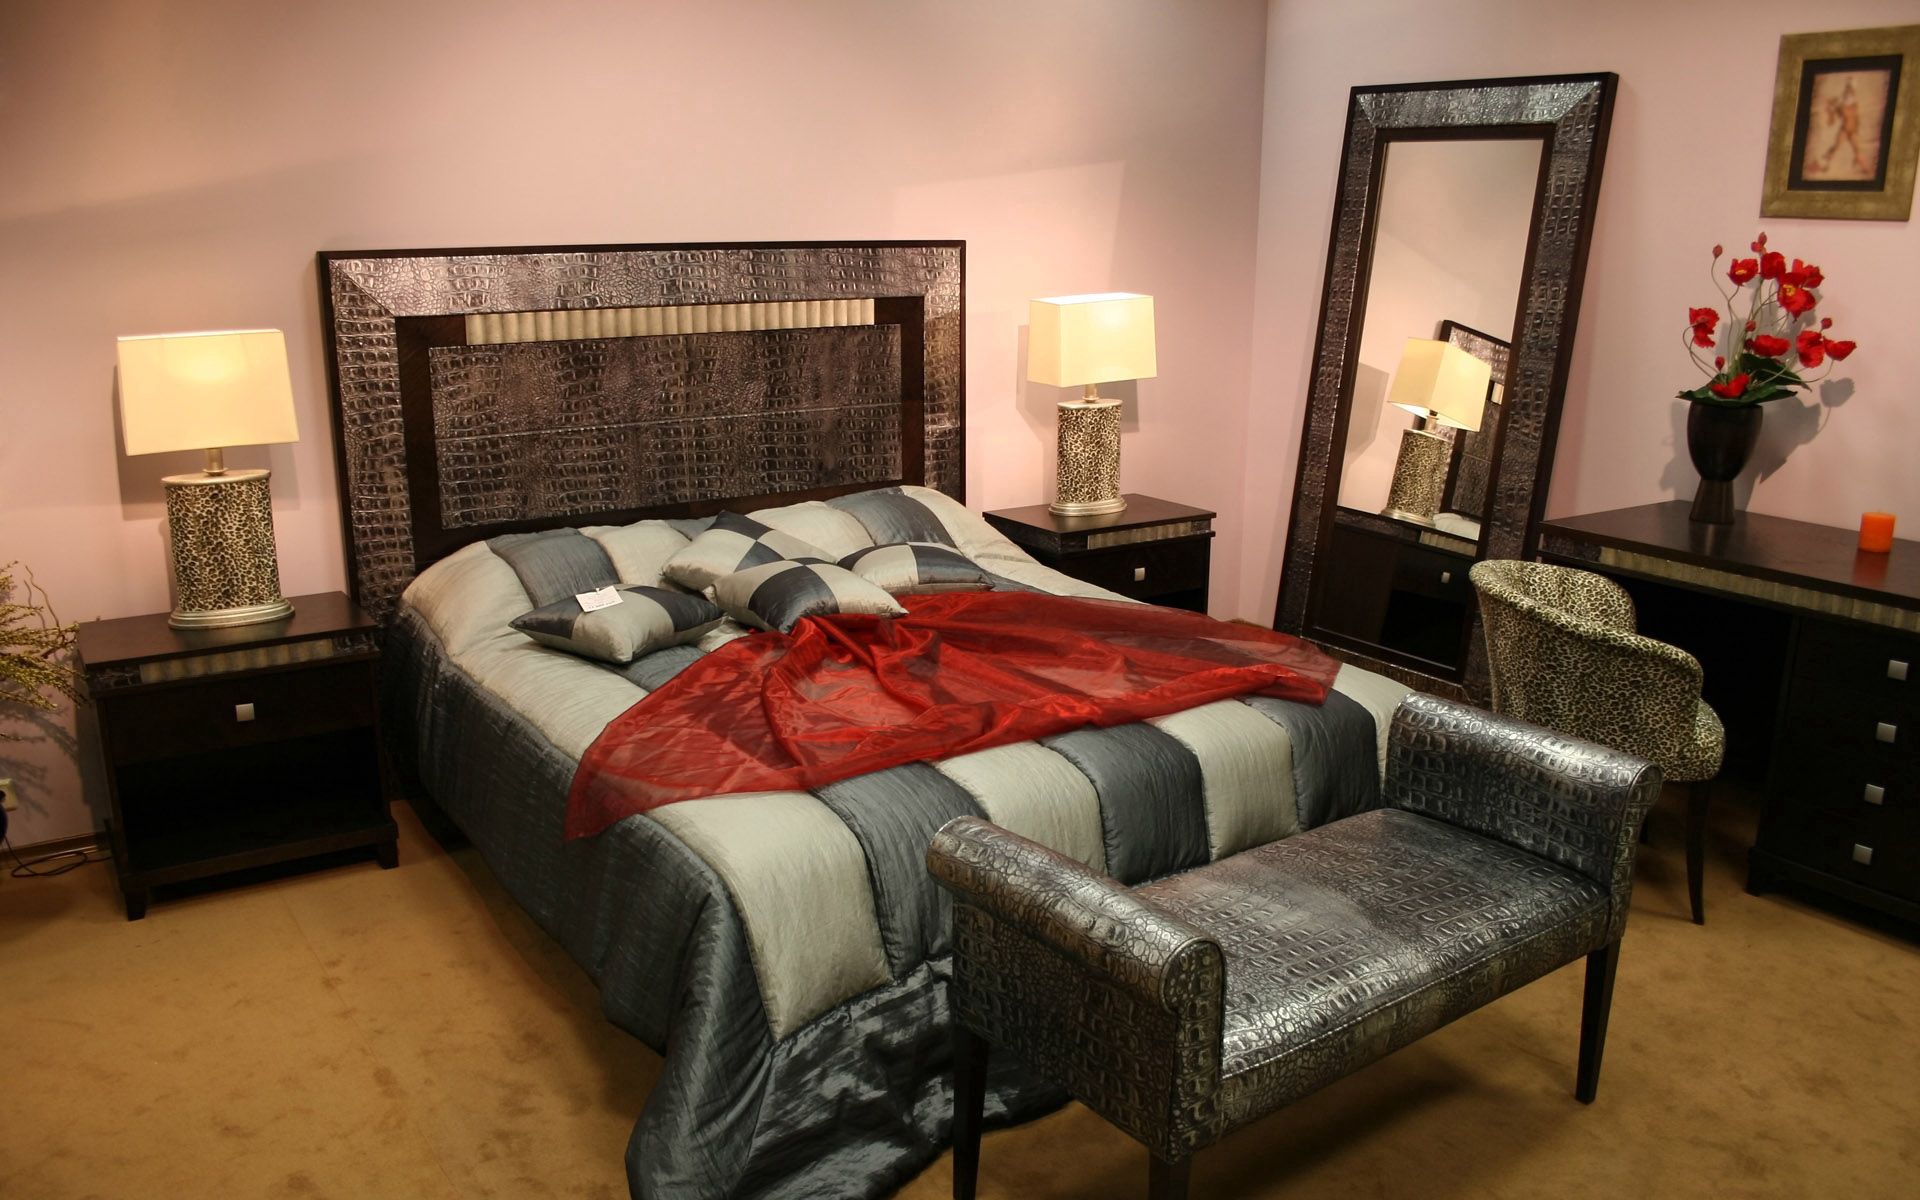 interior, miscellanea, miscellaneous, style, bed, coziness, comfort, sleeping, bedroom lock screen backgrounds